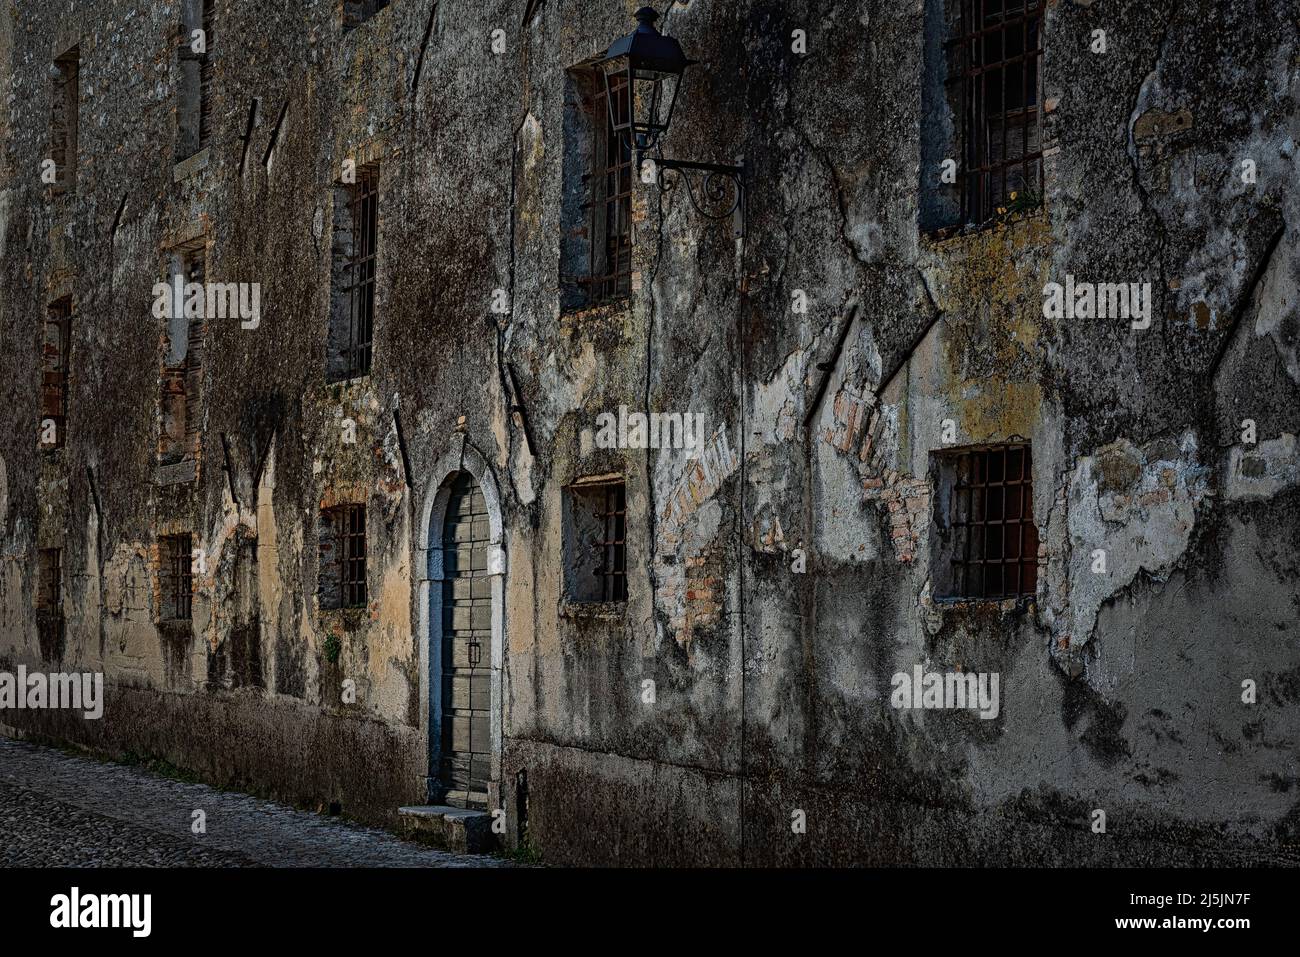 Fachada misteriosa de la casa con rejillas de hierro oxidado en las ventanas. Strassoldo, Udine, Friuli Venezia Giulia, Italia. Foto de stock